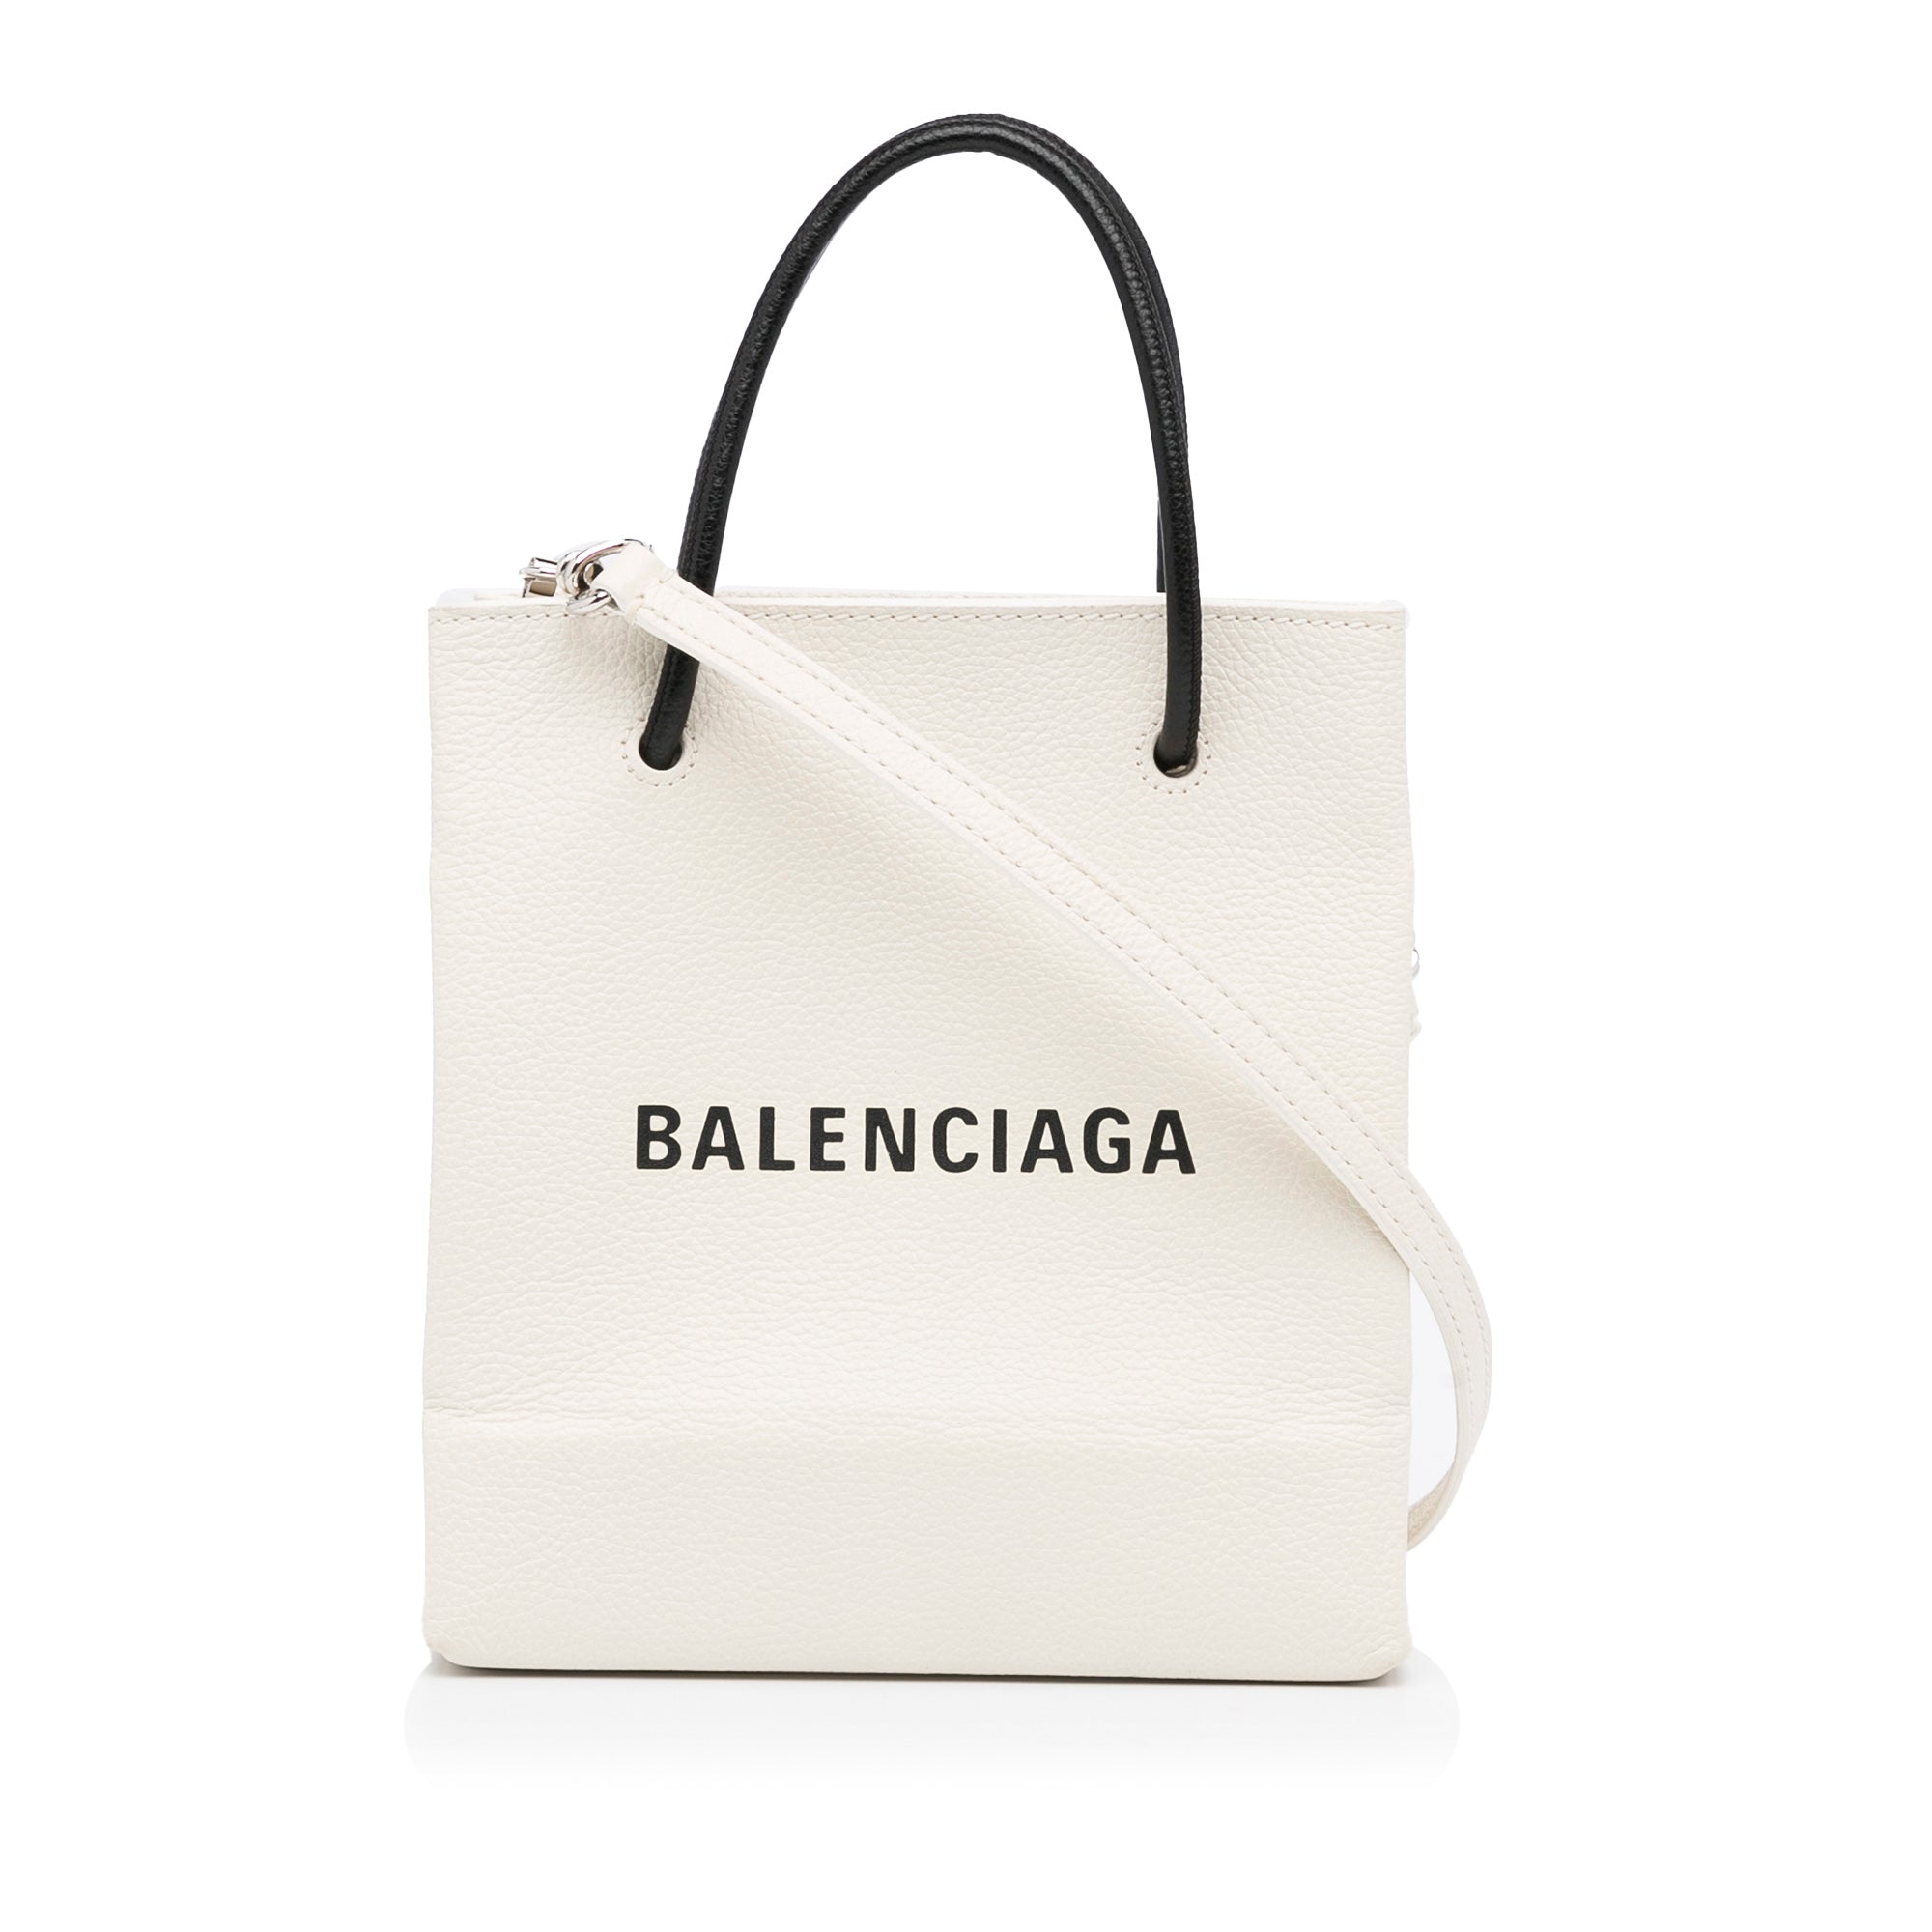 Balenciaga - Authenticated Handbag - Leather Black Plain for Women, Very Good Condition